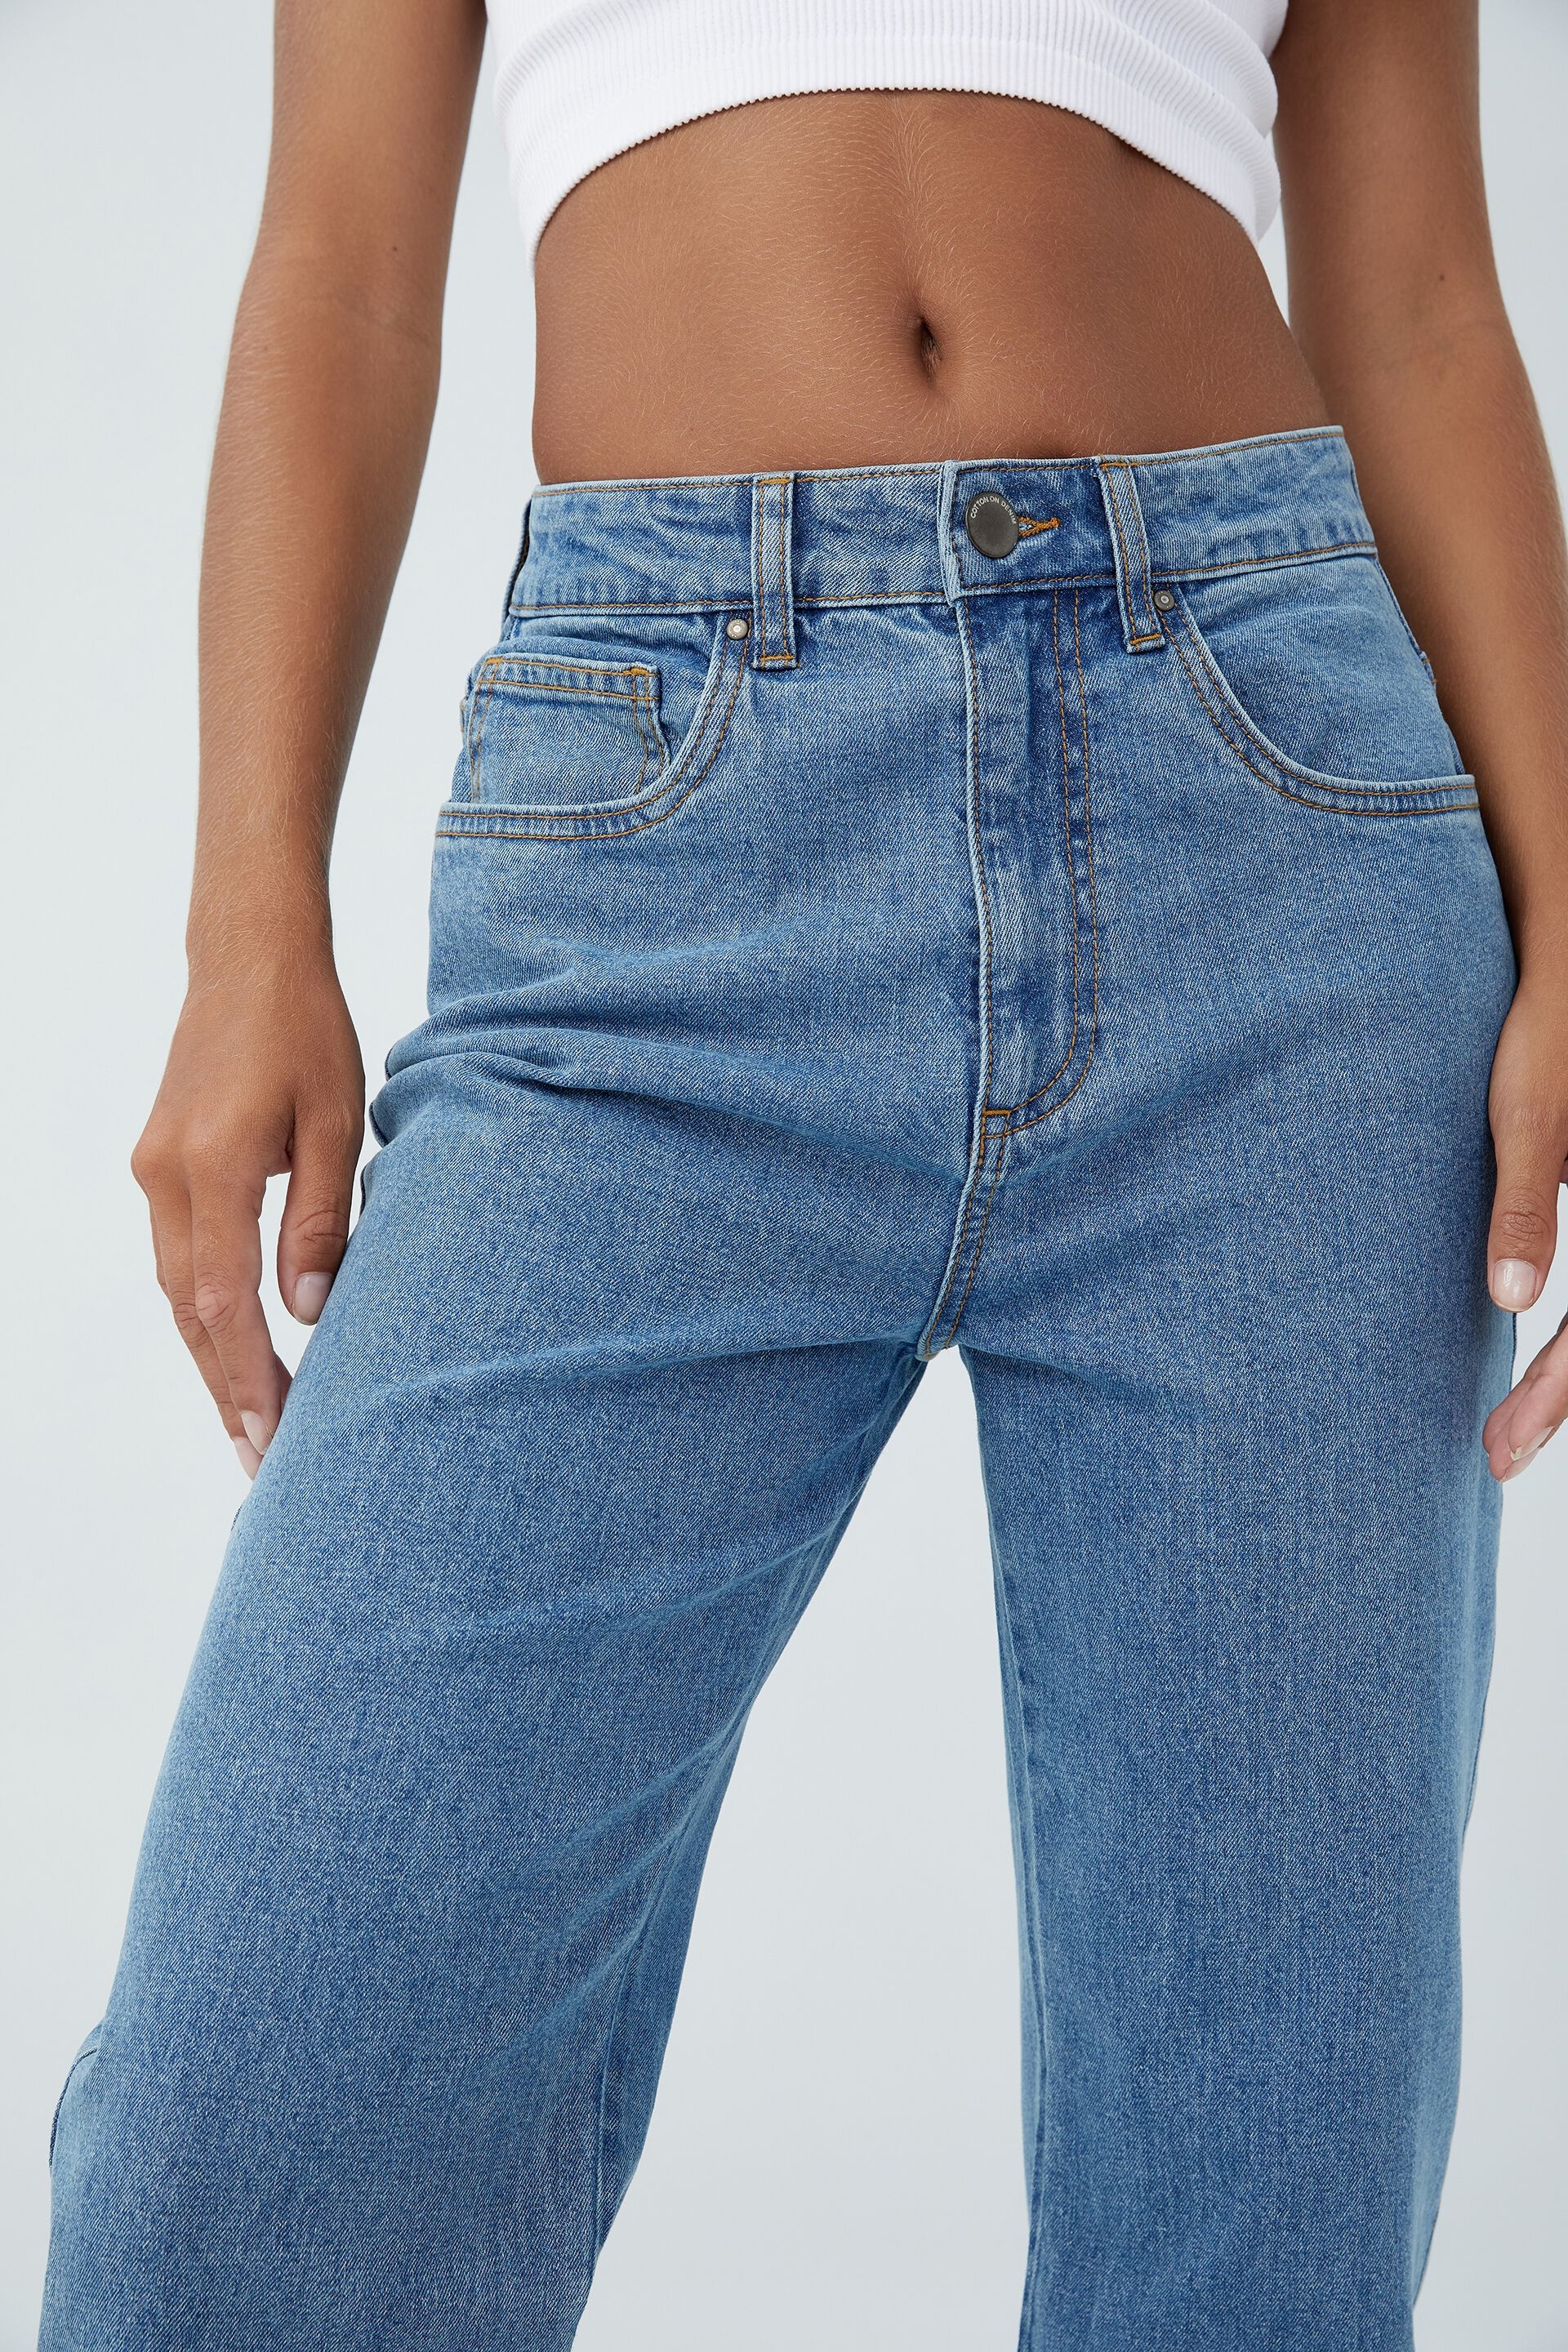 cabi 100% boyfriend jeans distressed high-rise cotton womens sz 10 denim |  Boyfriend jeans, Women, Clothes design